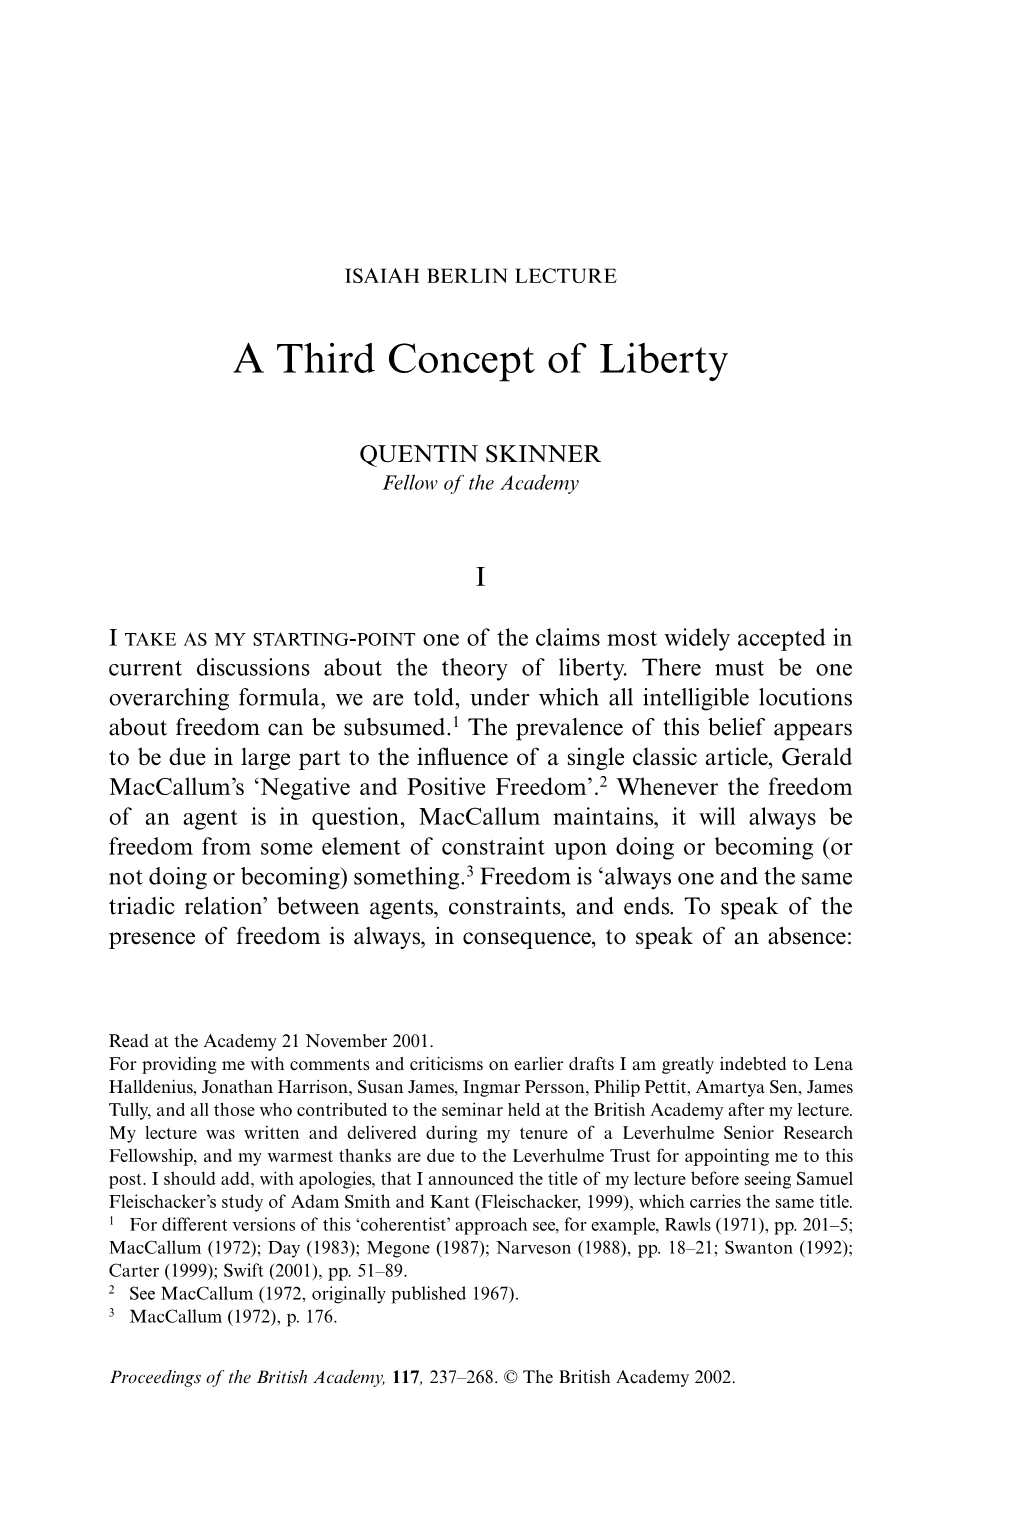 A Third Concept of Liberty